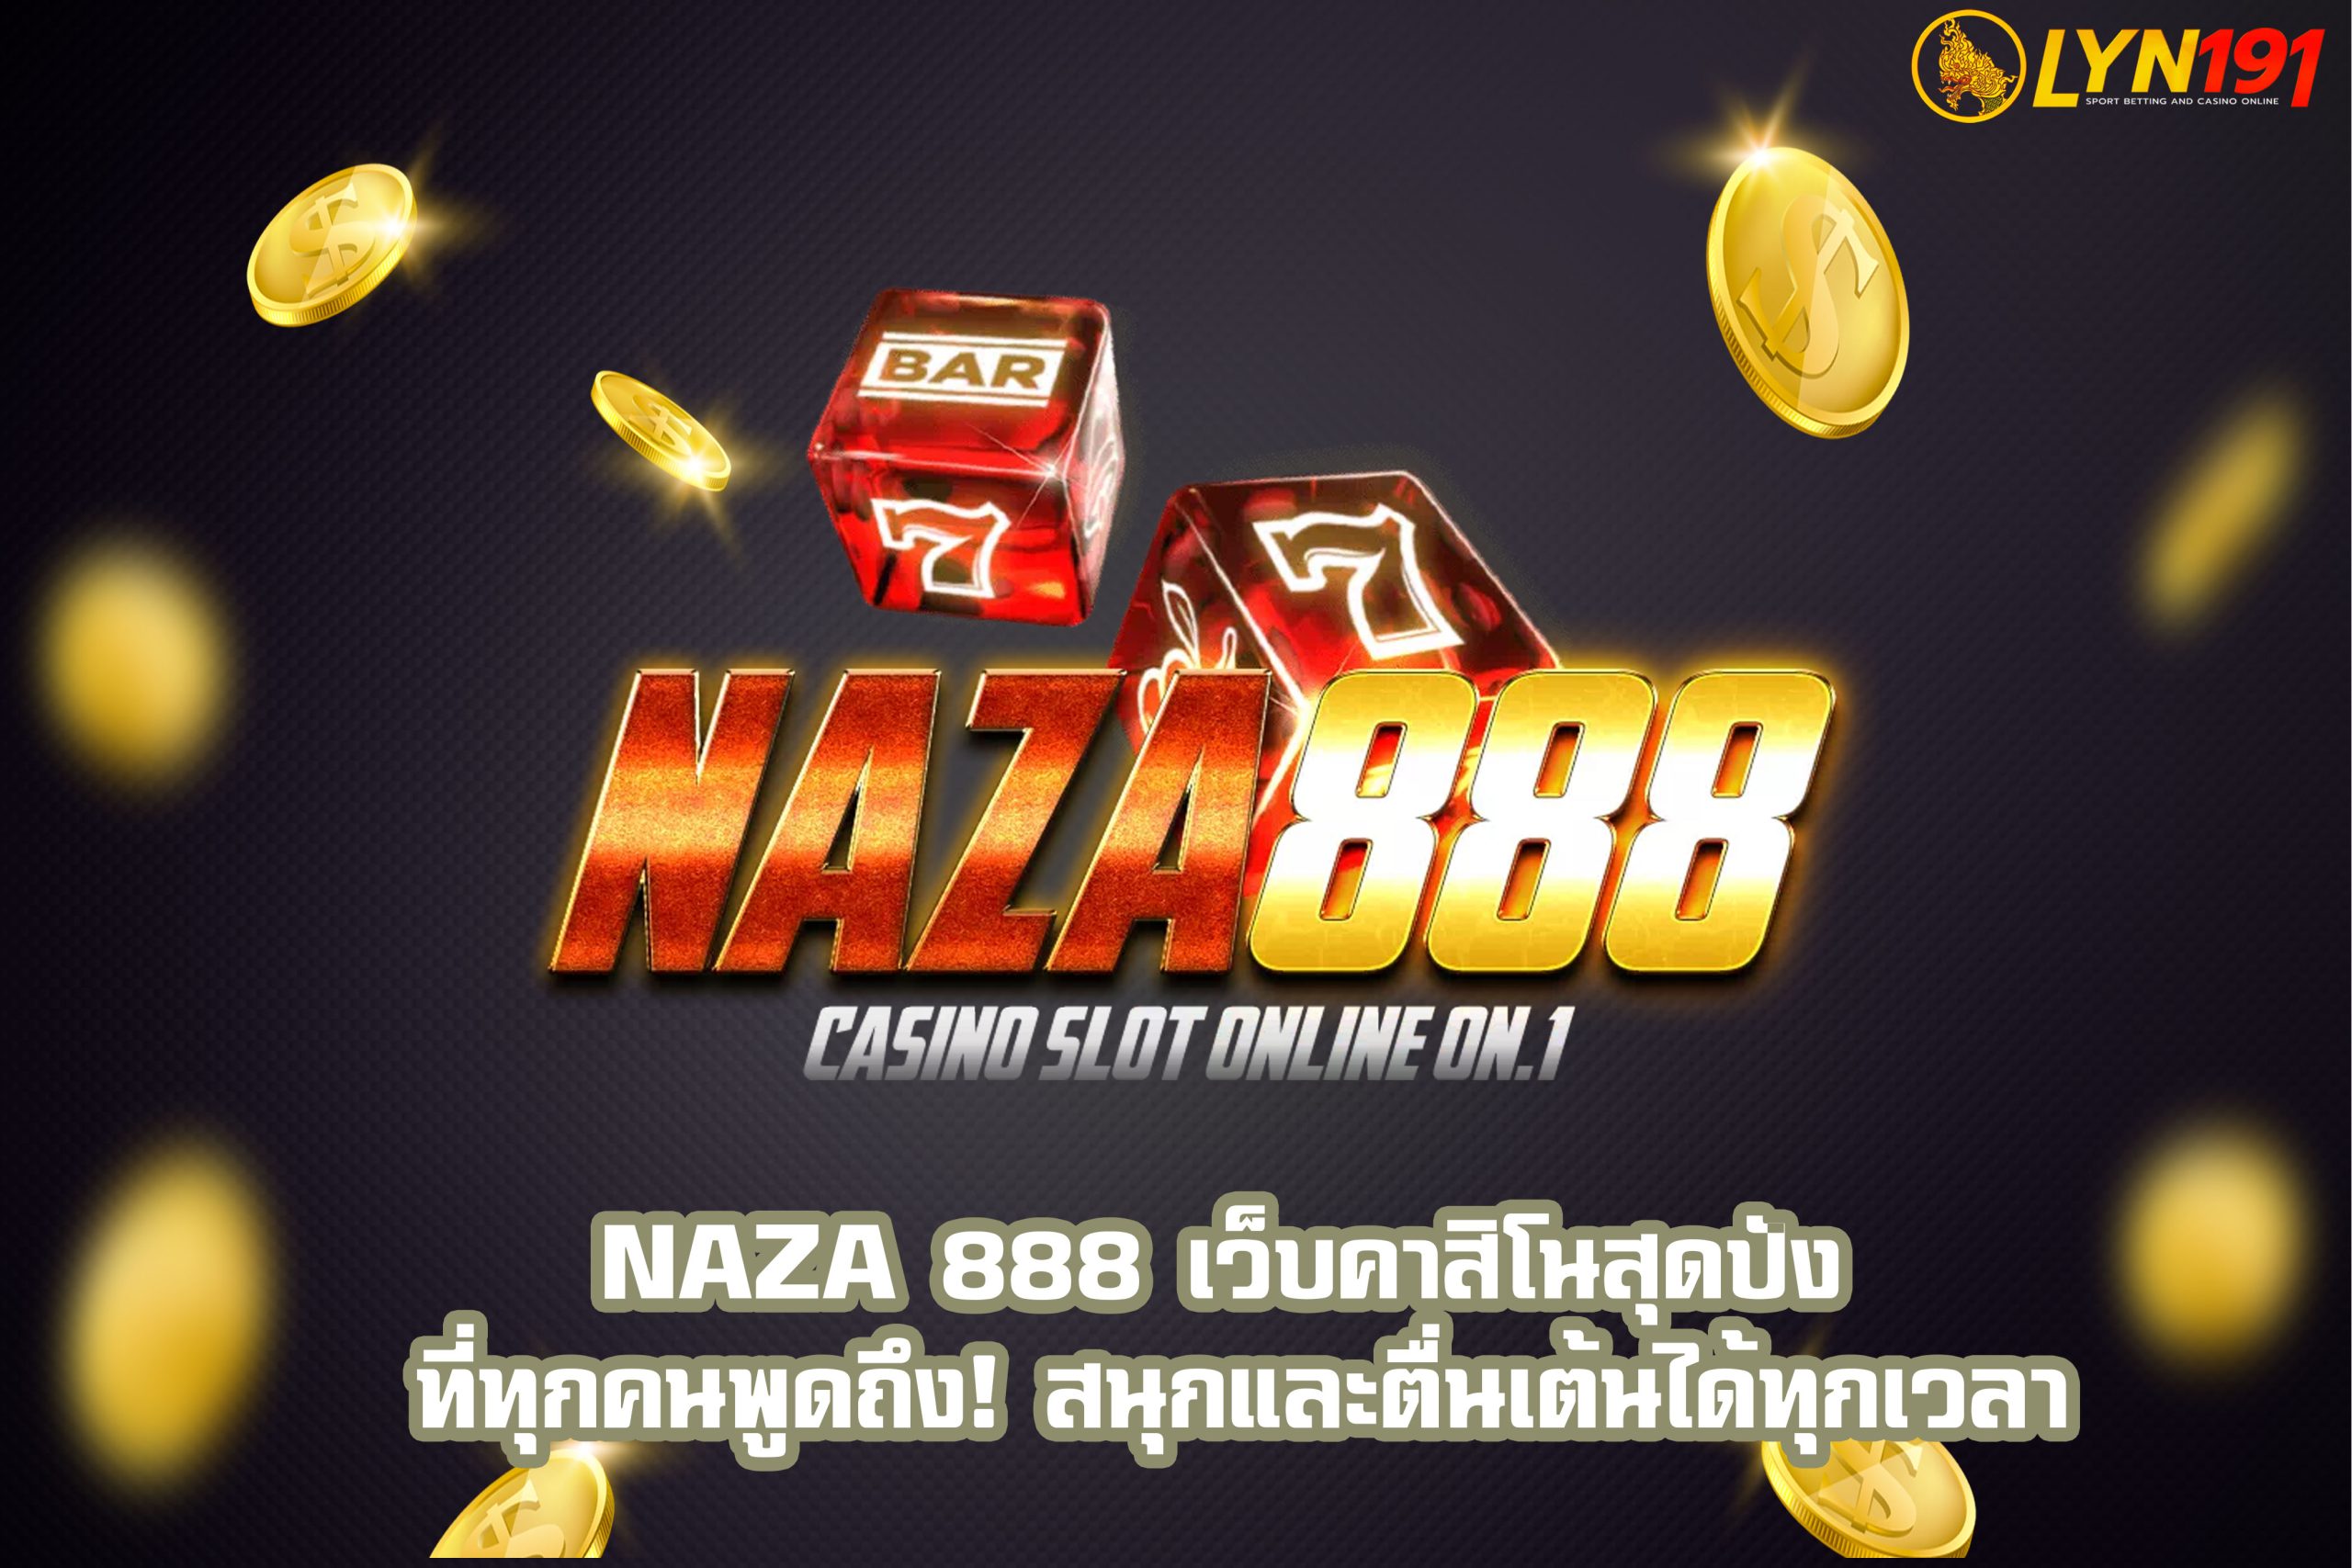 NAZA 888 เว็บคาสิโนสุดปัง ที่ทุกคนพูดถึง! สนุกและตื่นเต้นได้ทุกเวลา